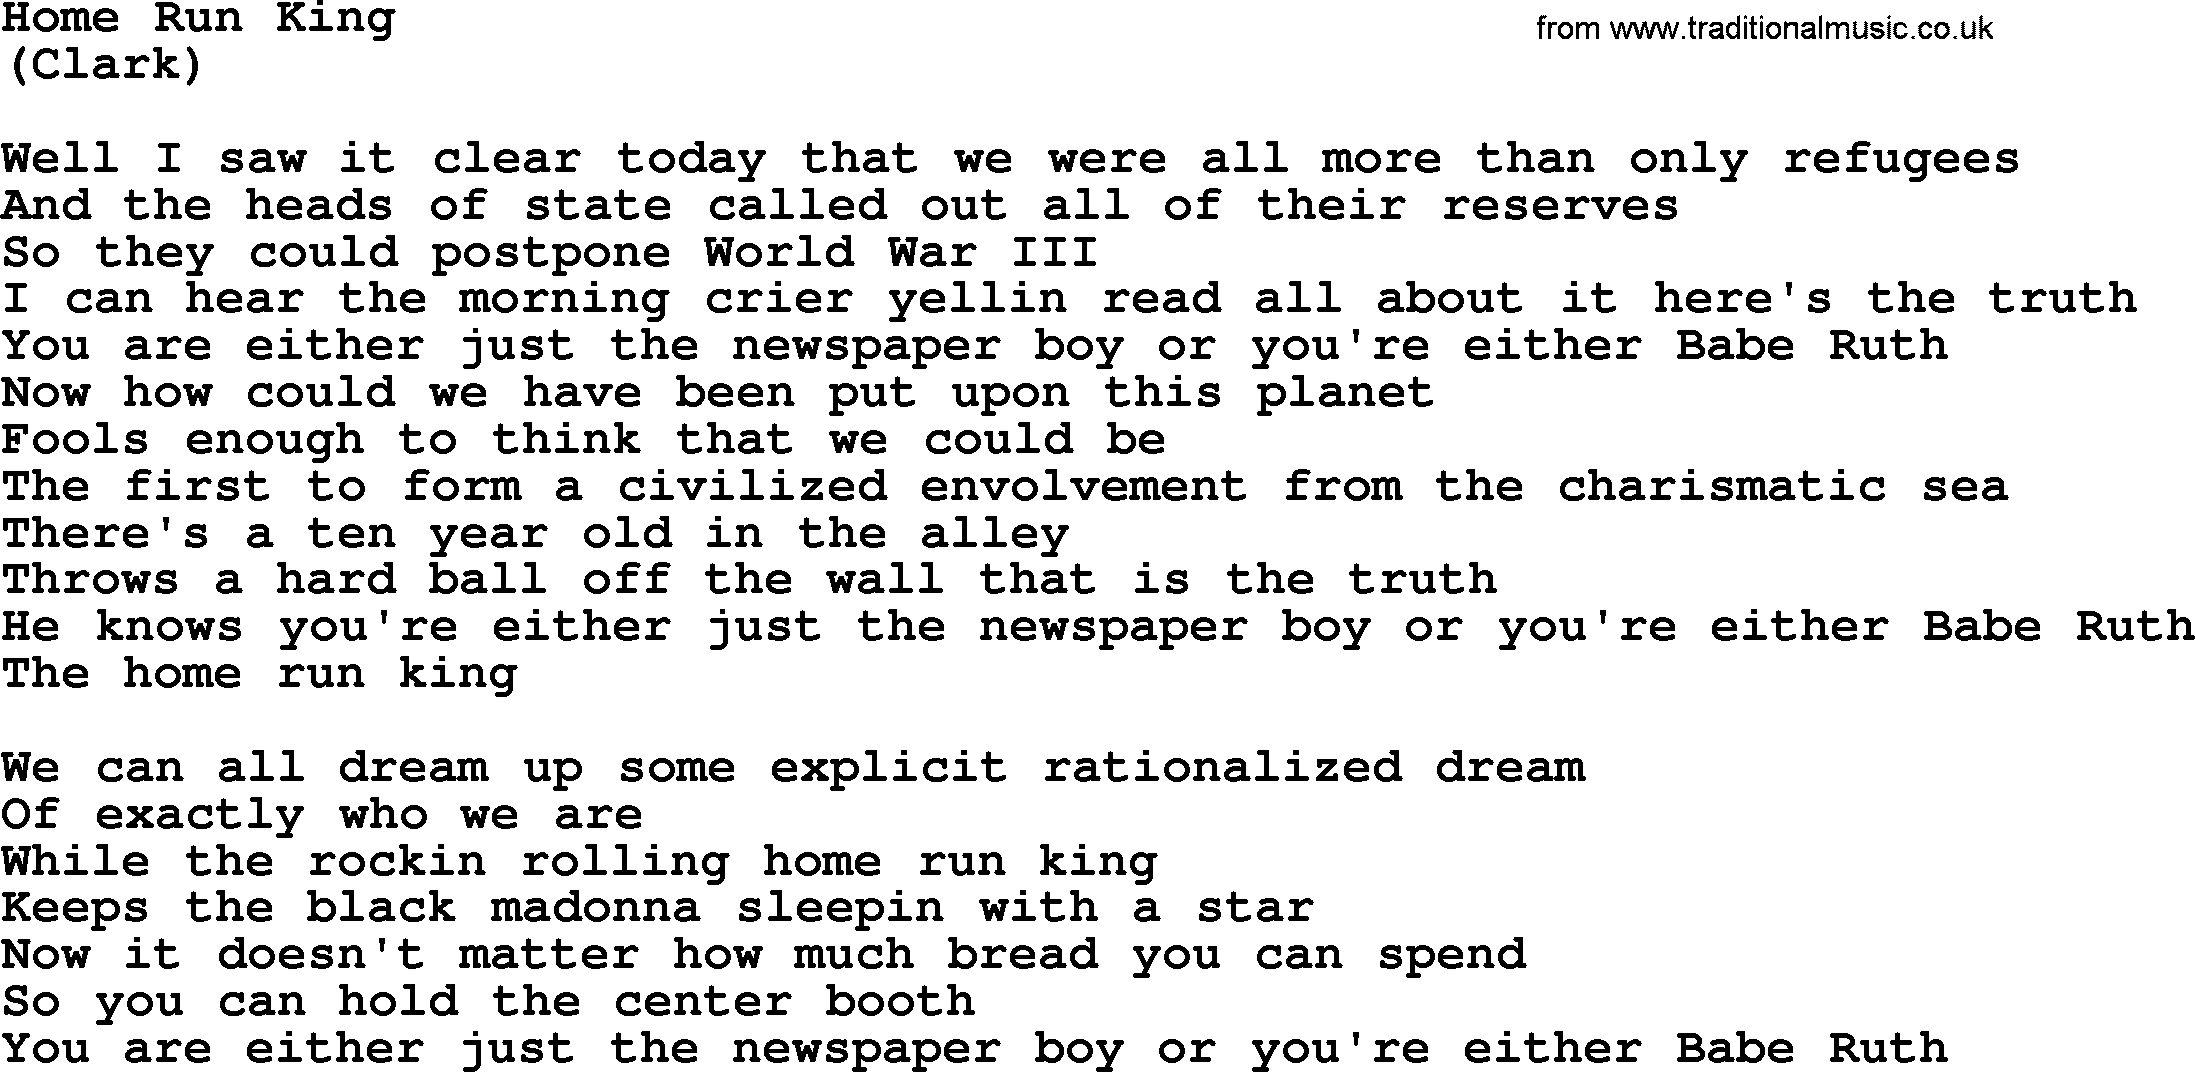 The Byrds song Home Run King, lyrics